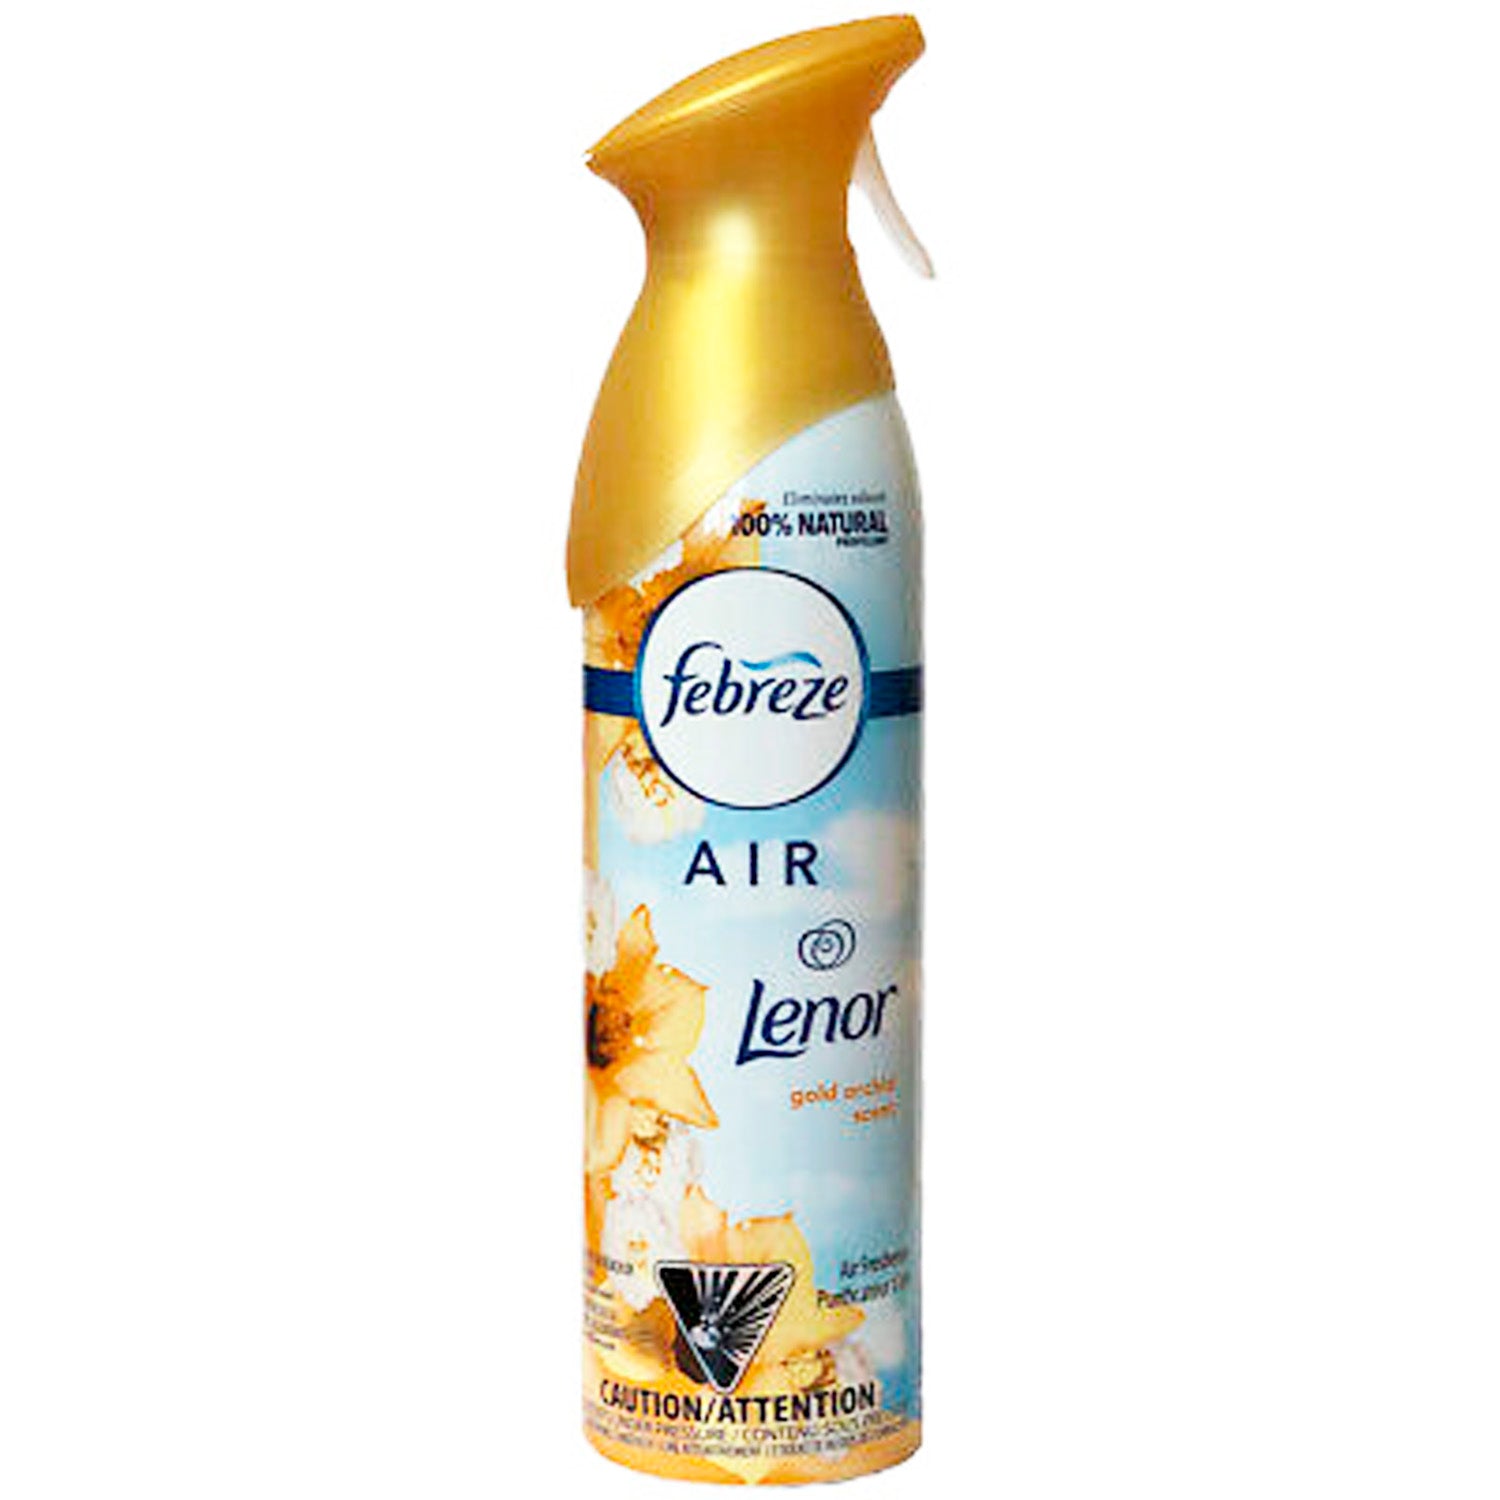 Febreze Air Mist Freshener Spray, Gold Orchid -300 ml / 10.14 oz - 6 Pack